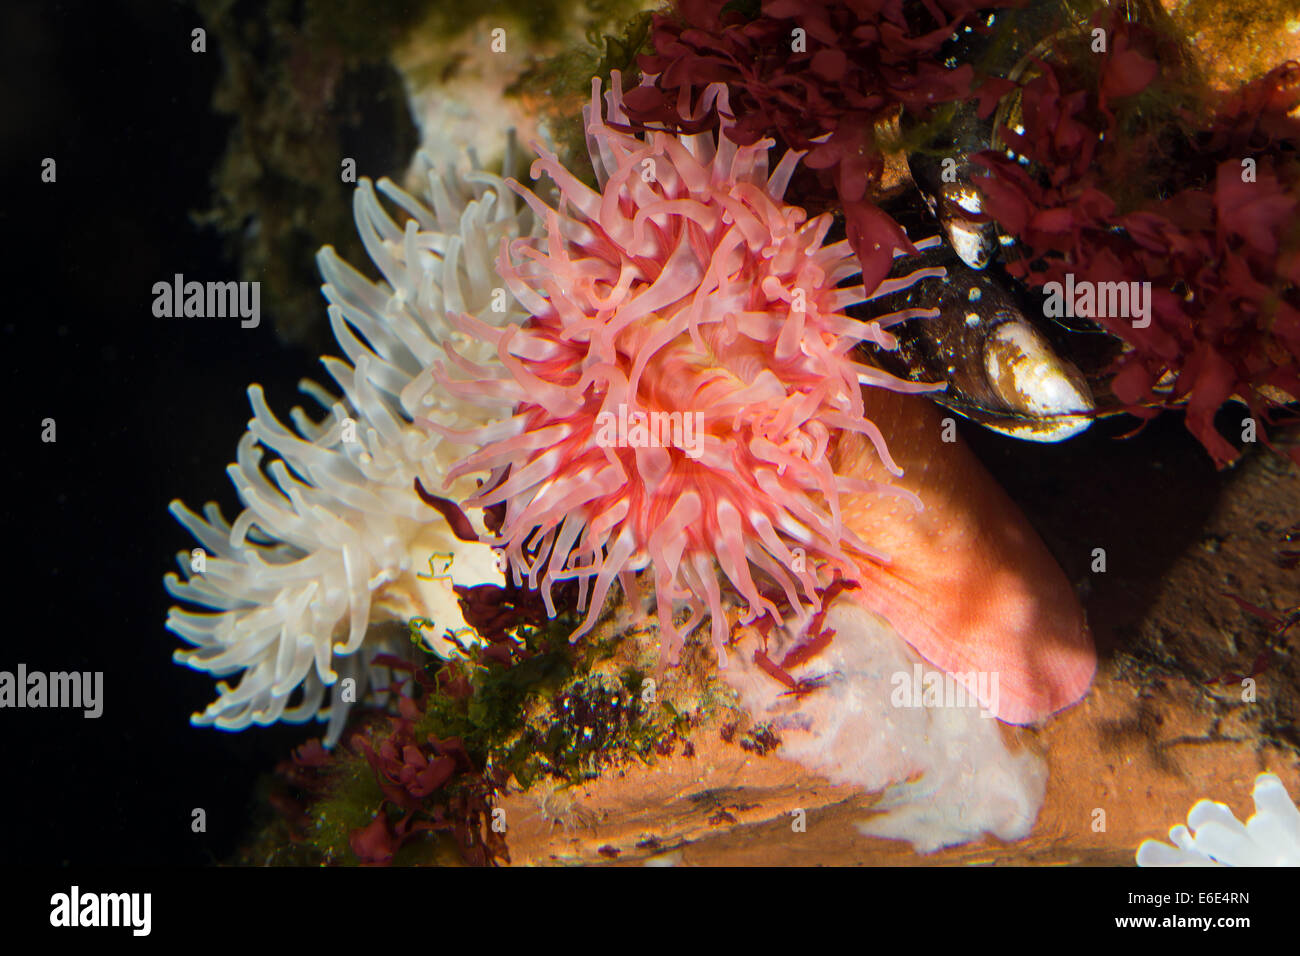 Northern red anemone, dahlia anemone, Dickhörnige Seerose, Braune Seedahlie, Urticina felina, Tealia felina, Seeanemone Stock Photo